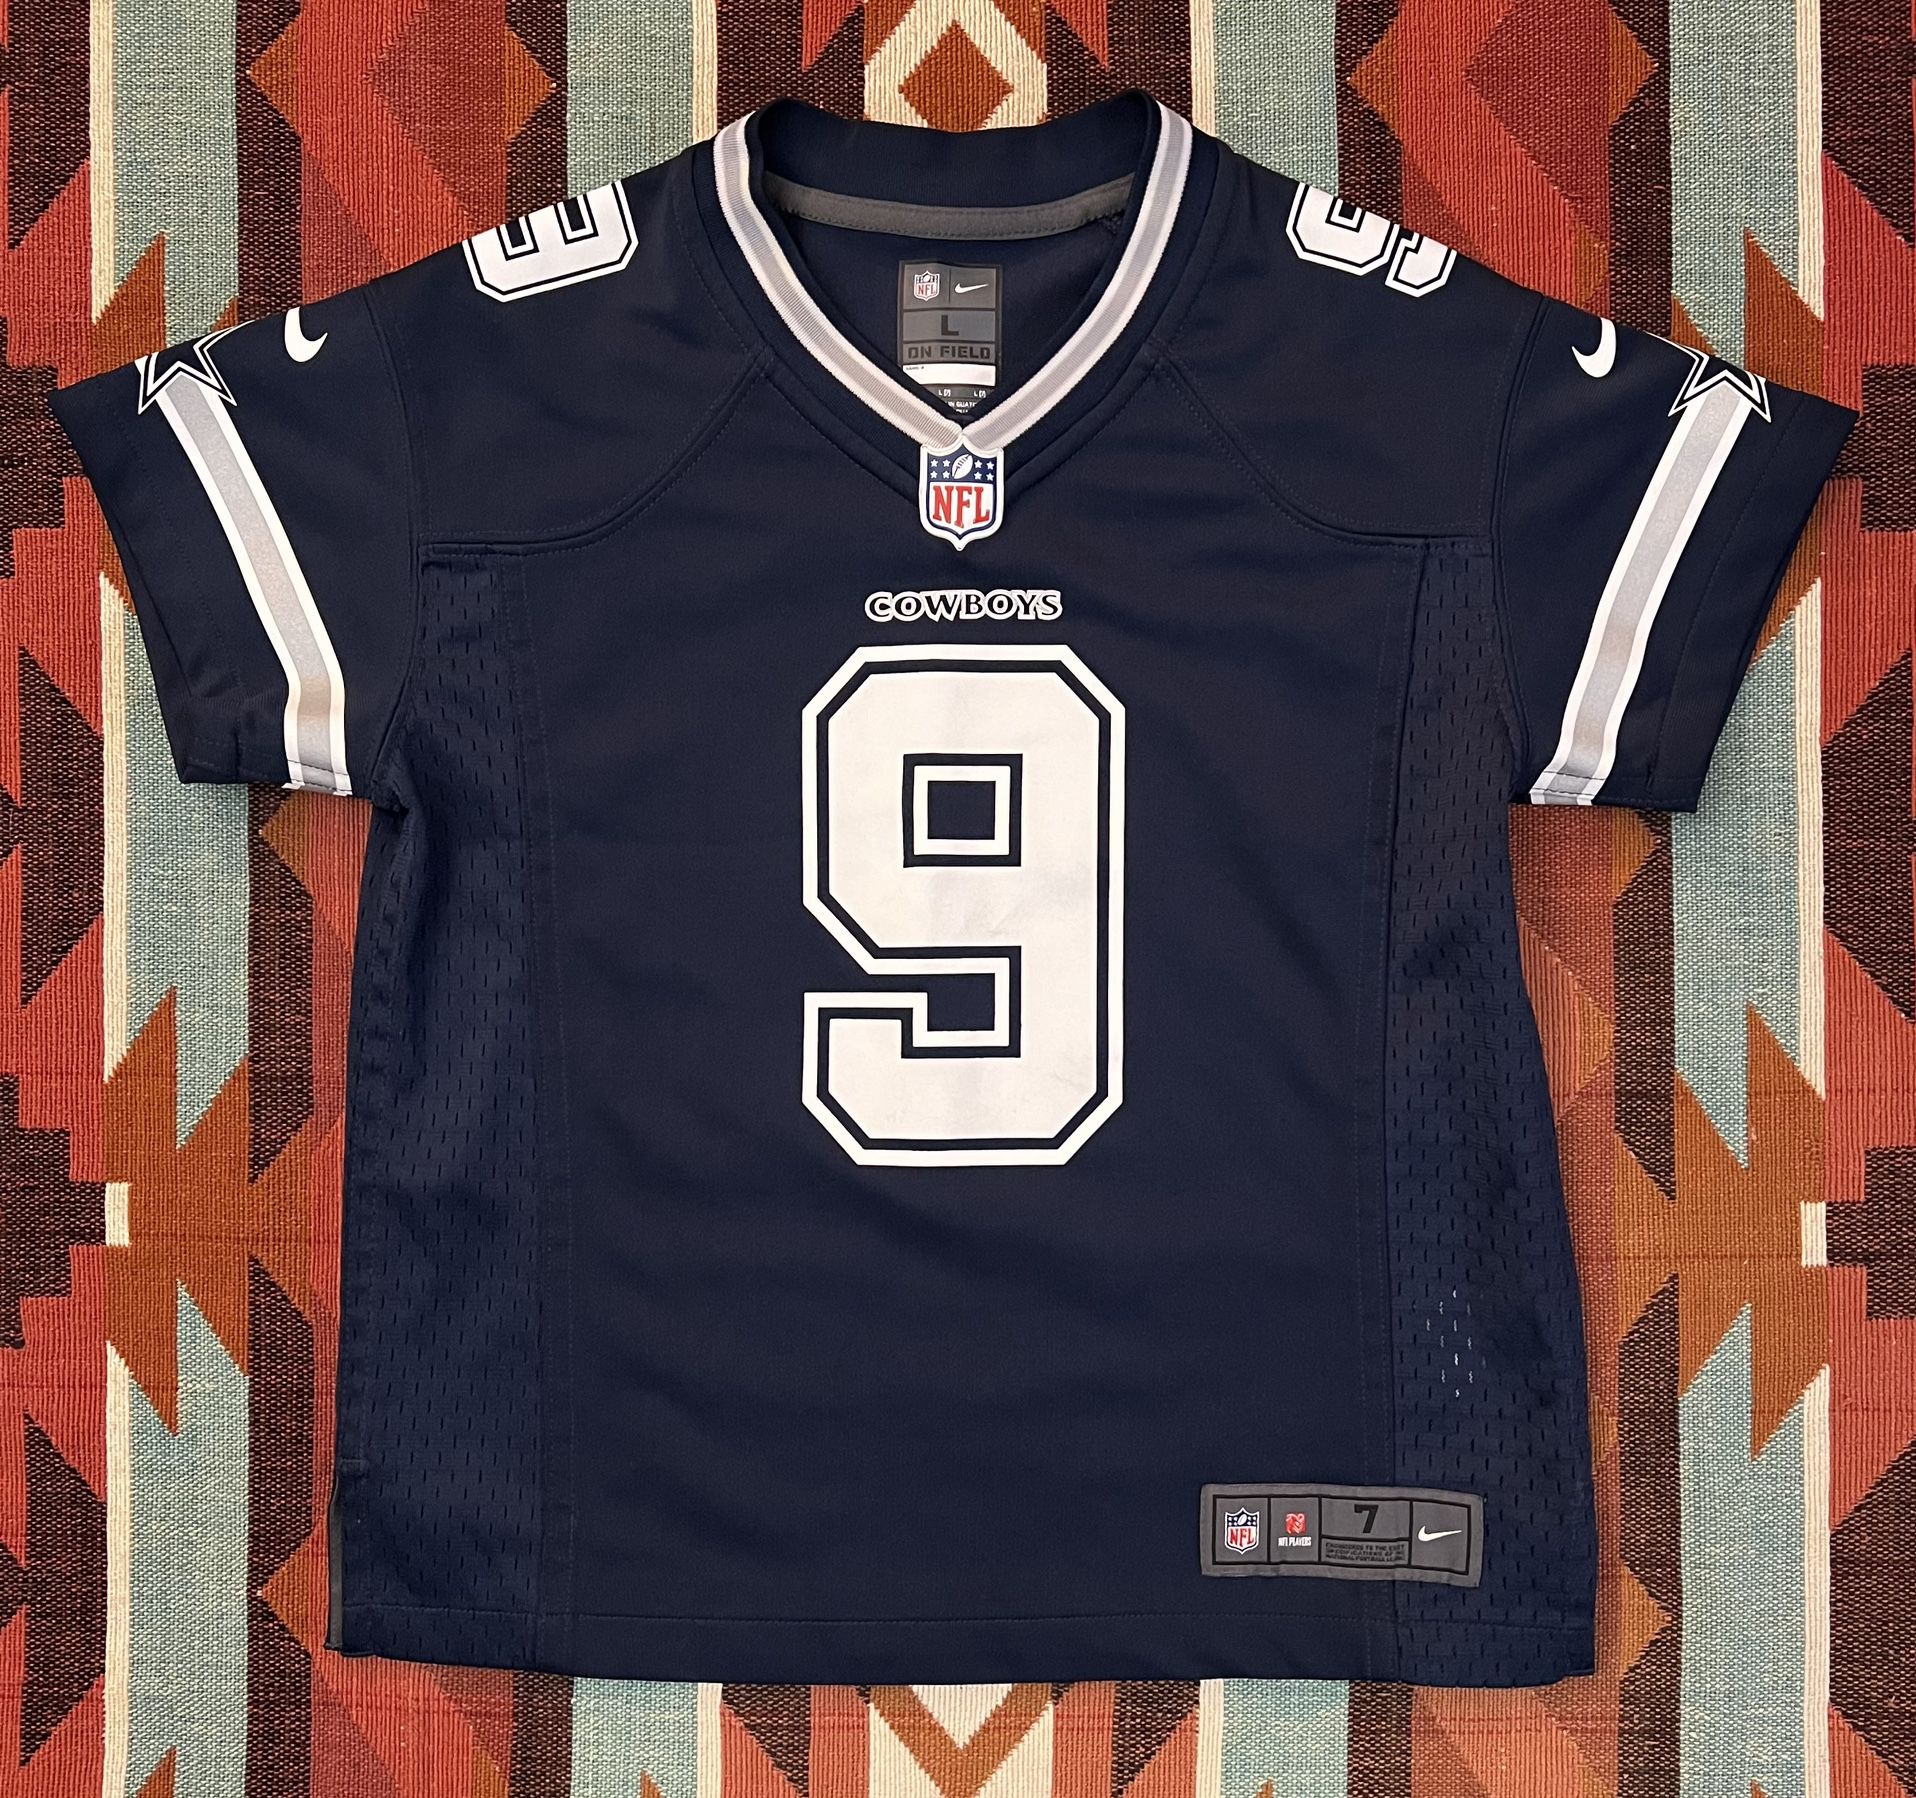 Nike NFL Dallas Cowboys Tony Romo #9 Jersey Kid’s Large Size 7